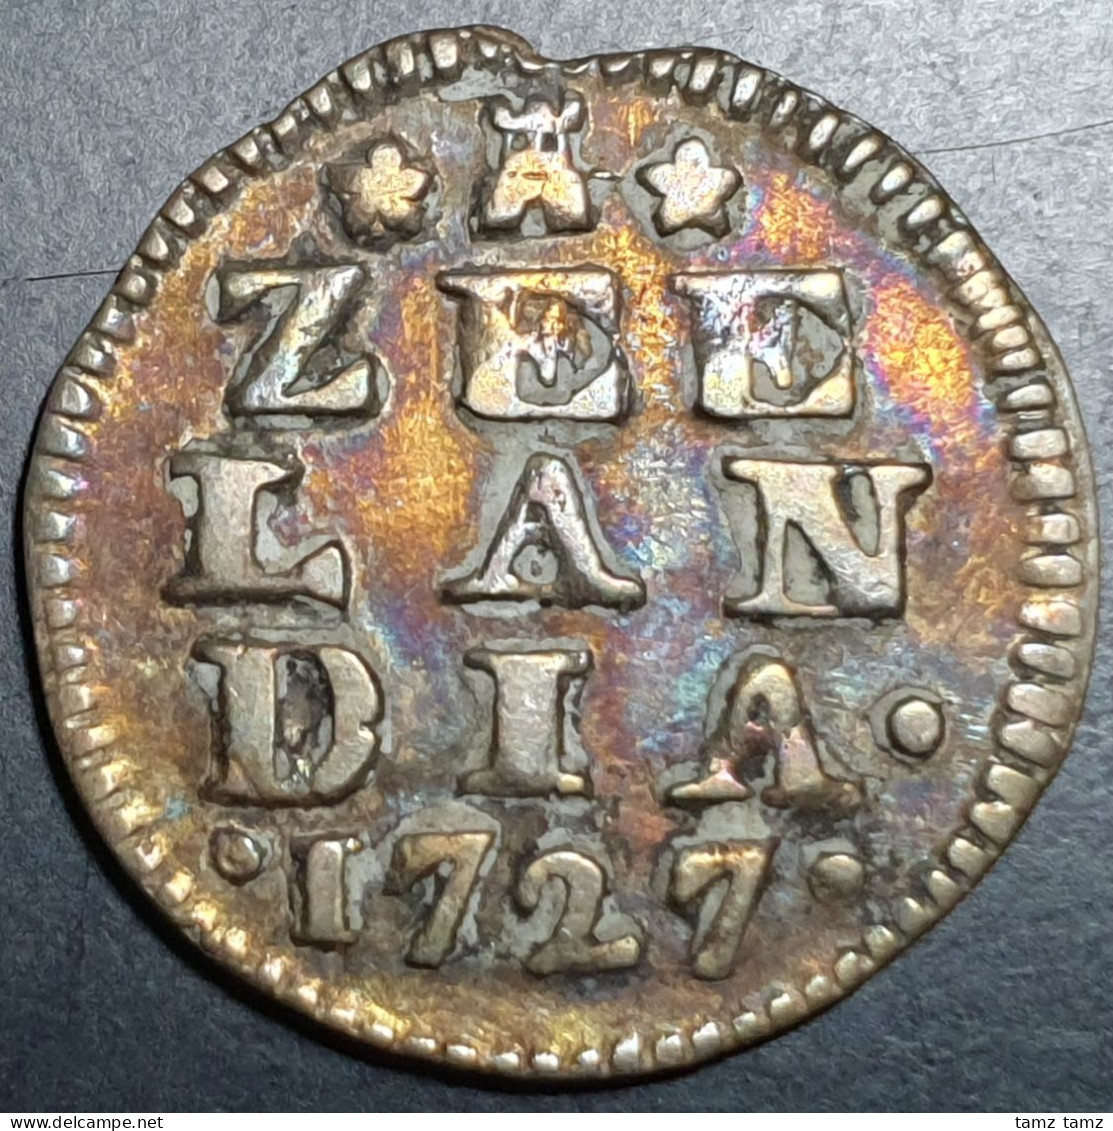 Provincial Dutch Netherlands Zeeland Zeelandia 2 Stuiver 1727 Silver Nice Toning - Provincial Coinage